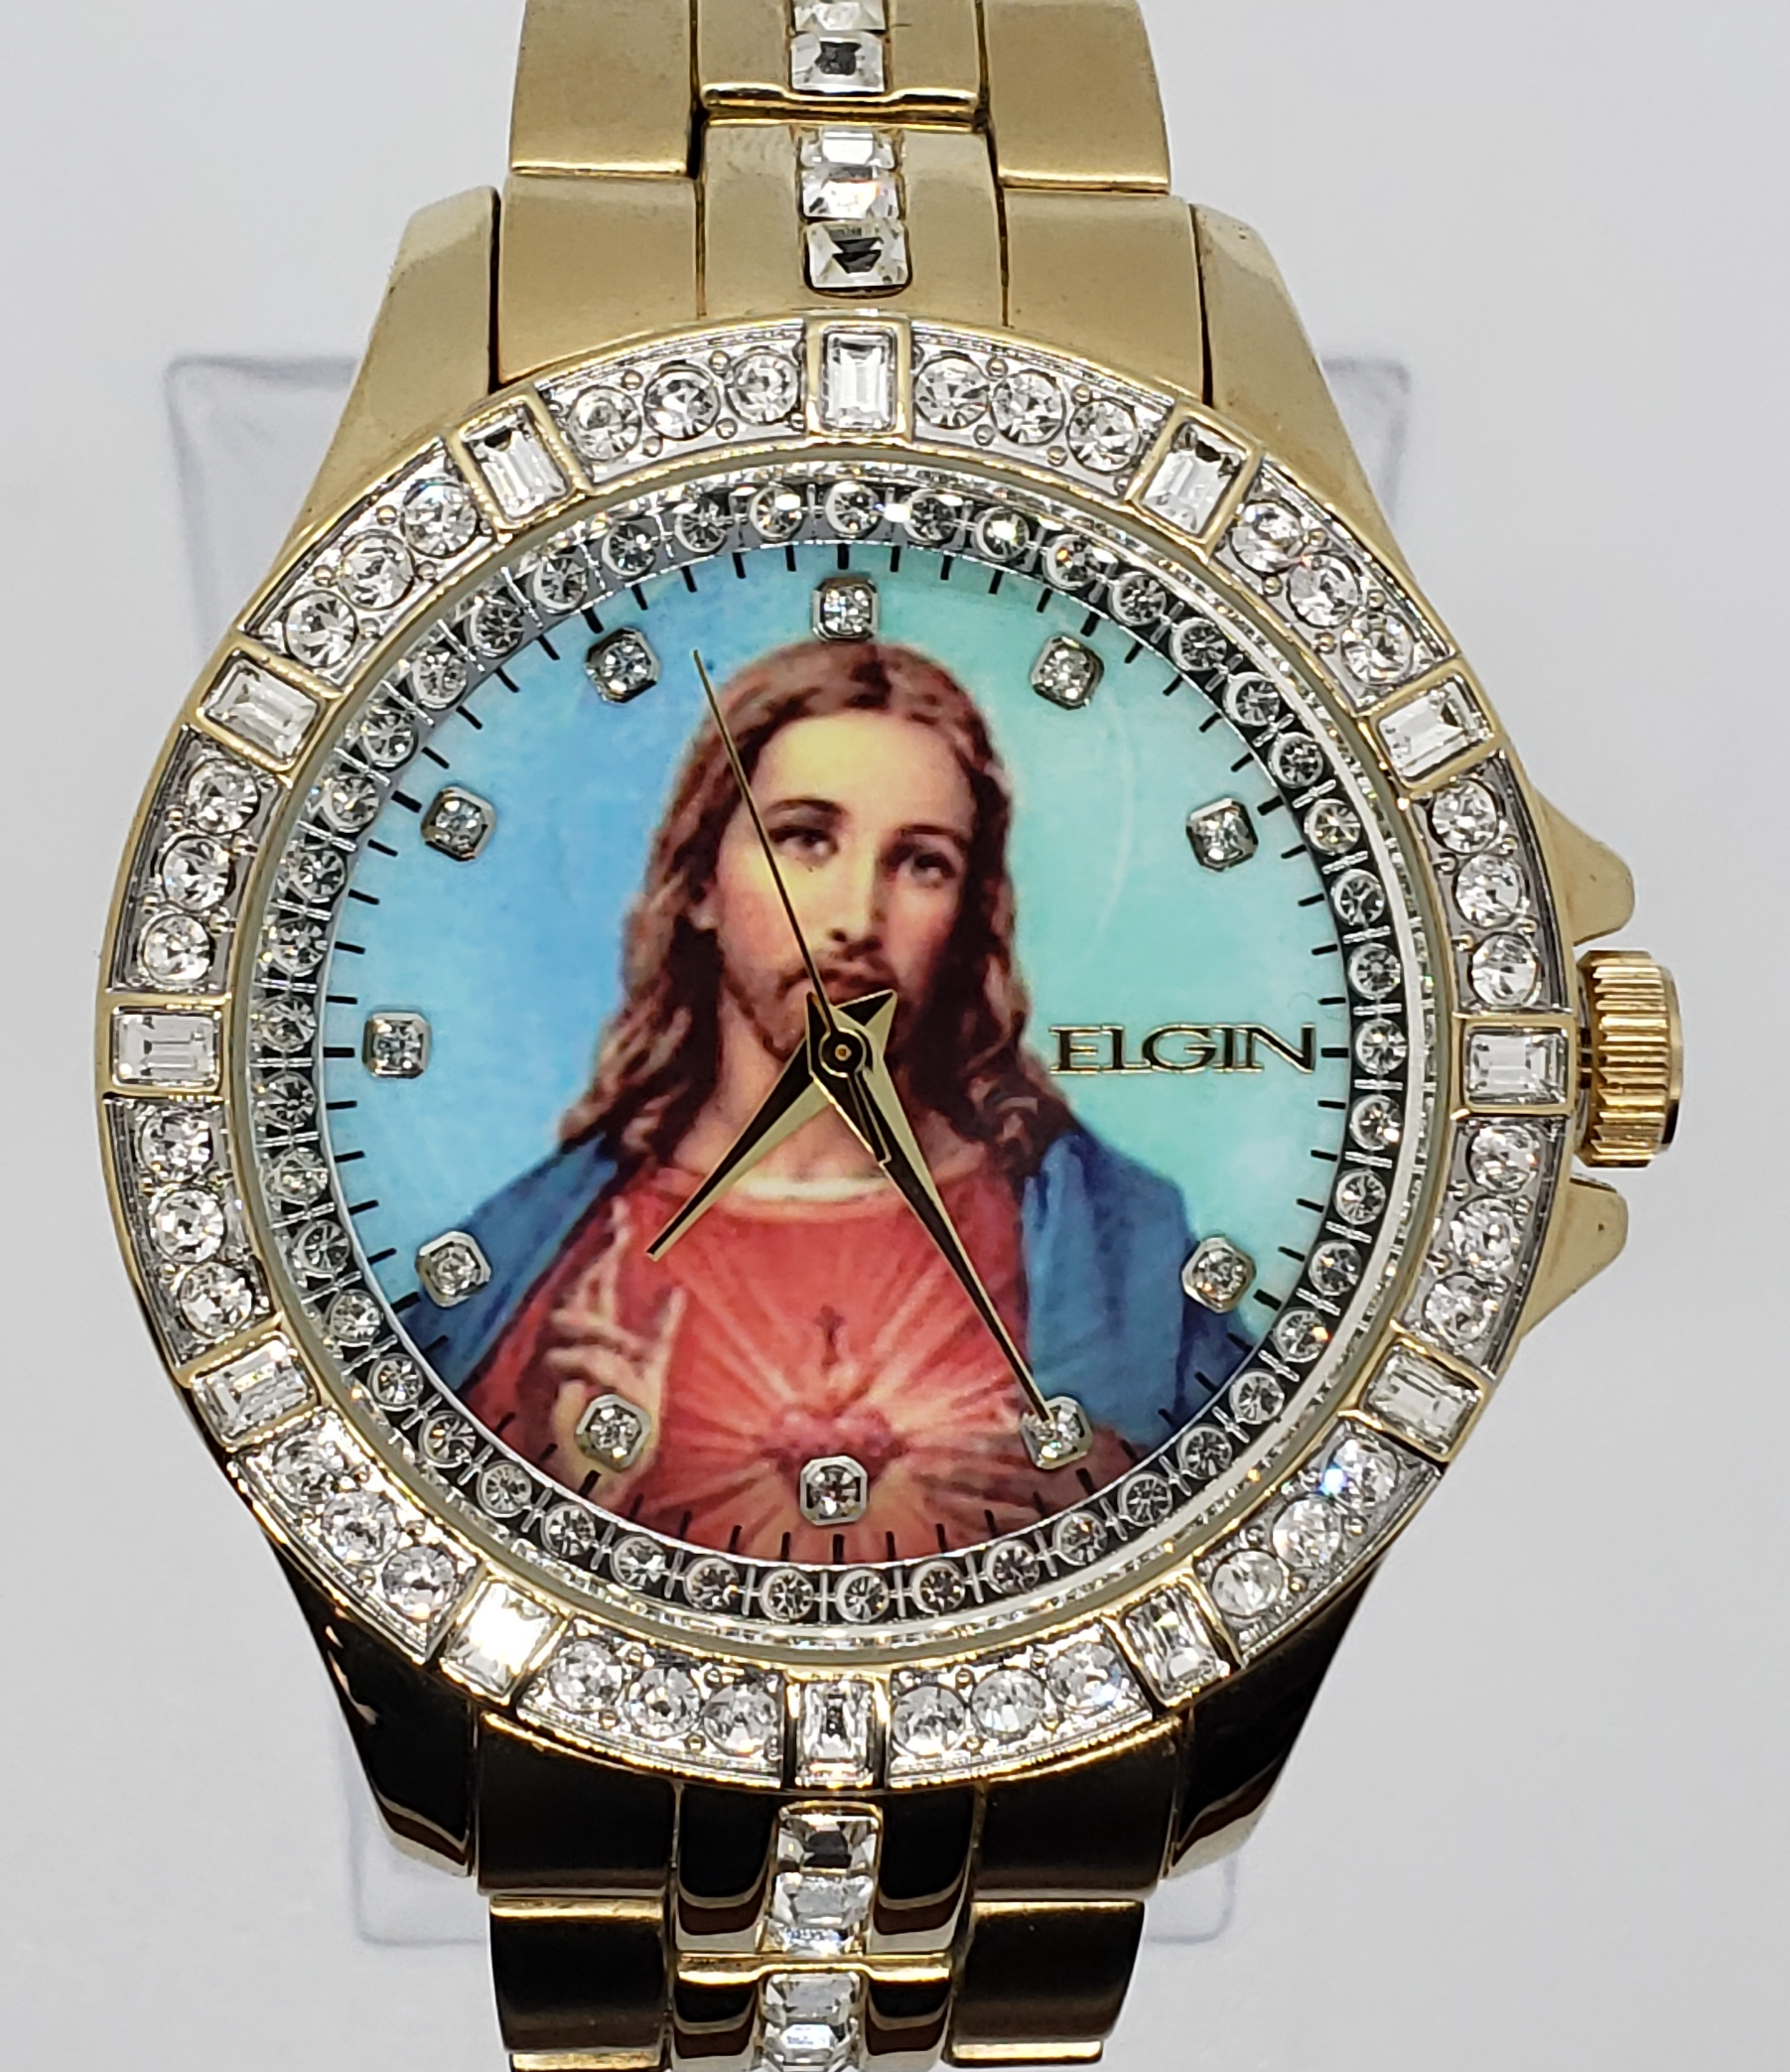 Elgin Men's 14K Gold-Plated Watch